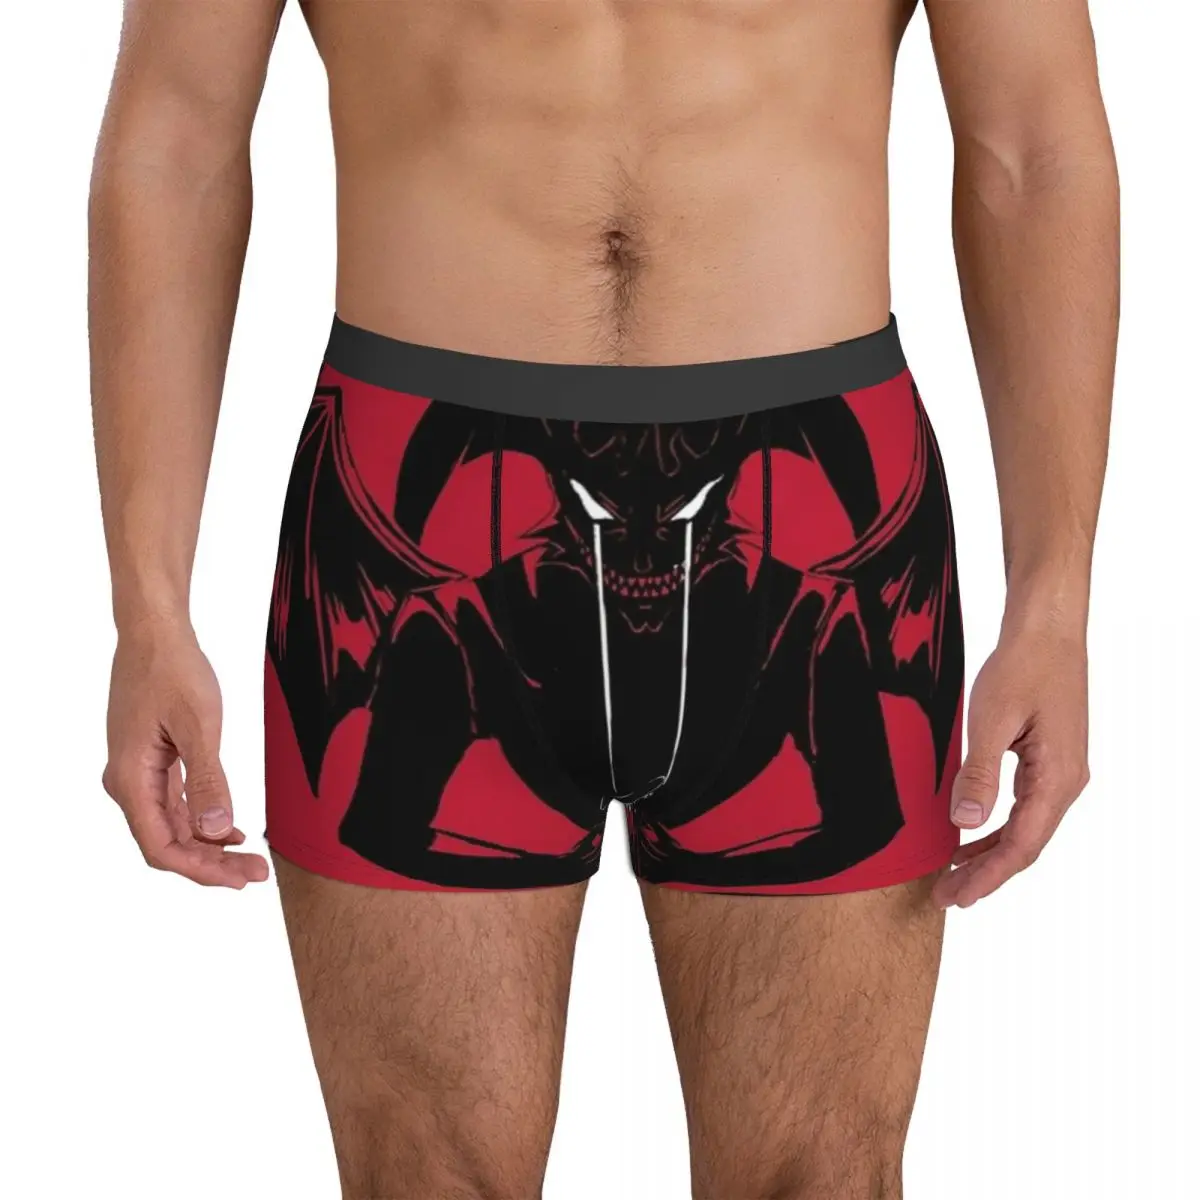 Devilman Crybaby Anime Underwear manga akira fudo graphic Elastic Underpants Custom Shorts Briefs Pouch Men Oversize Trunk